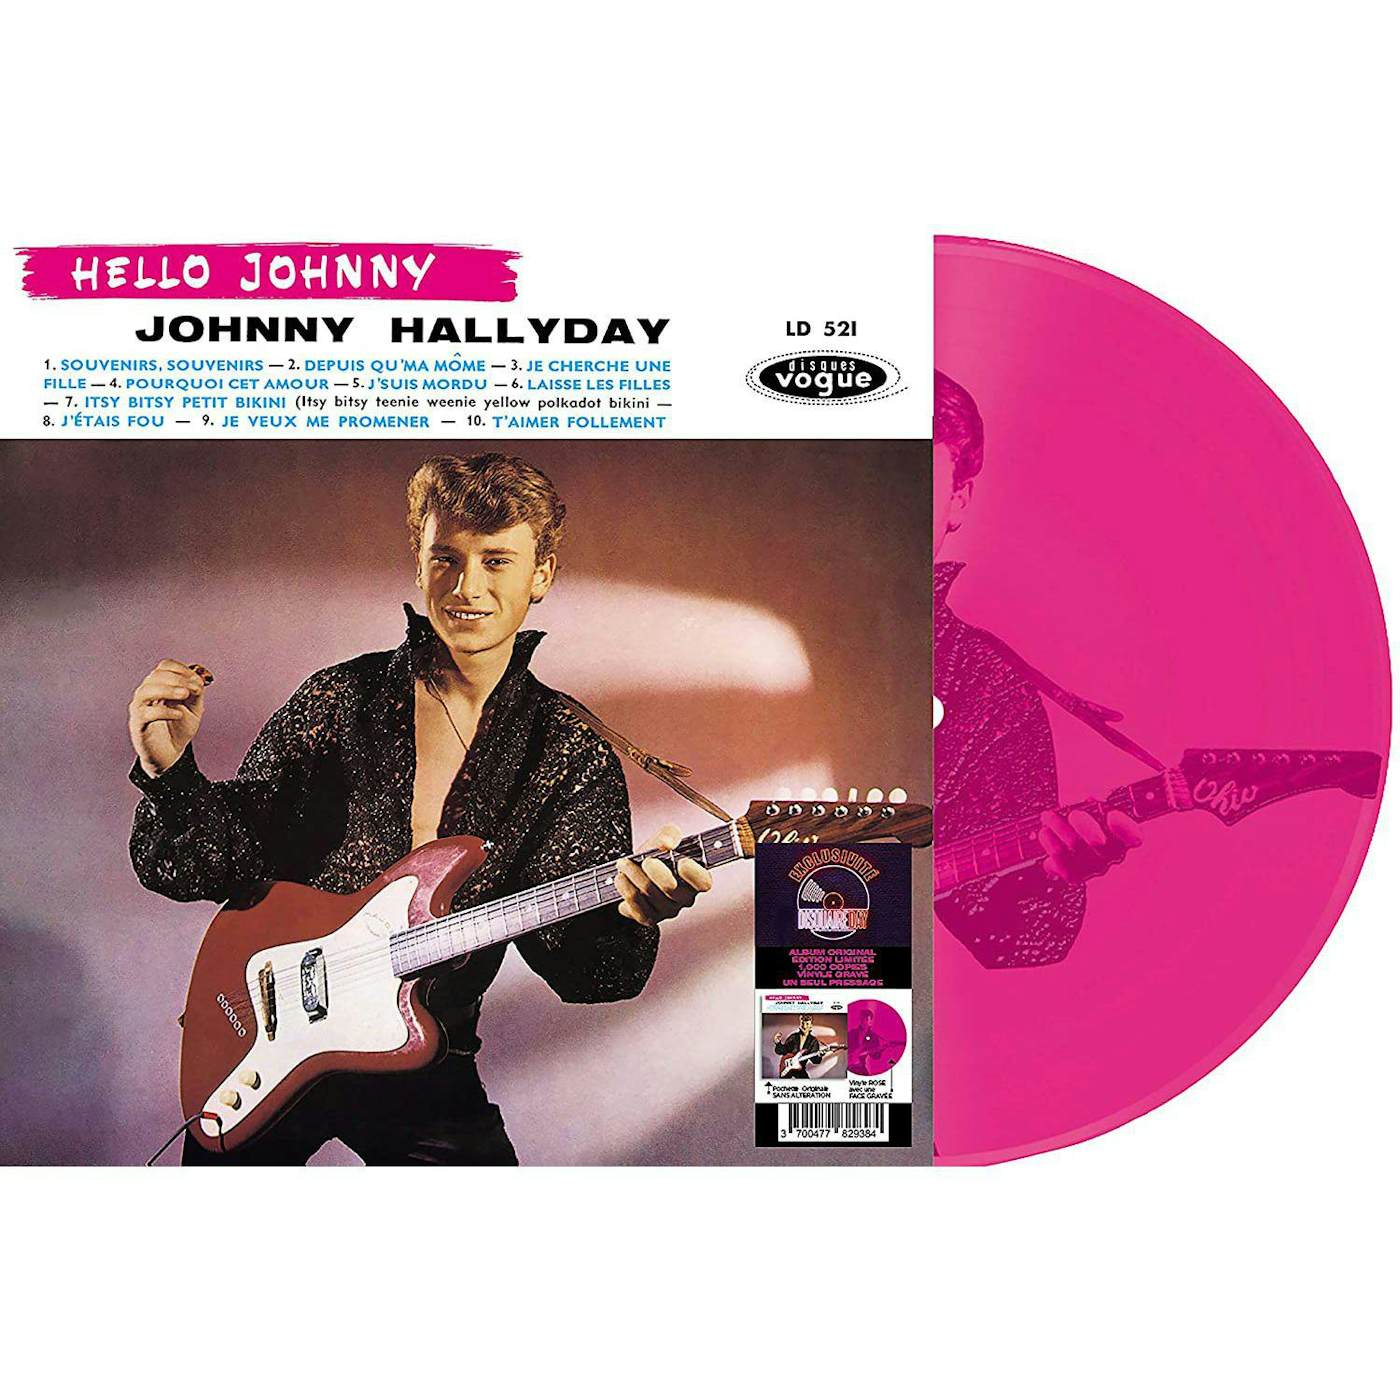 Johnny Hallyday LP Vinyl Record - Hello Johnny Grave (Etched Pink Vinyl)  (Rsd 20. 19 ) $45.41